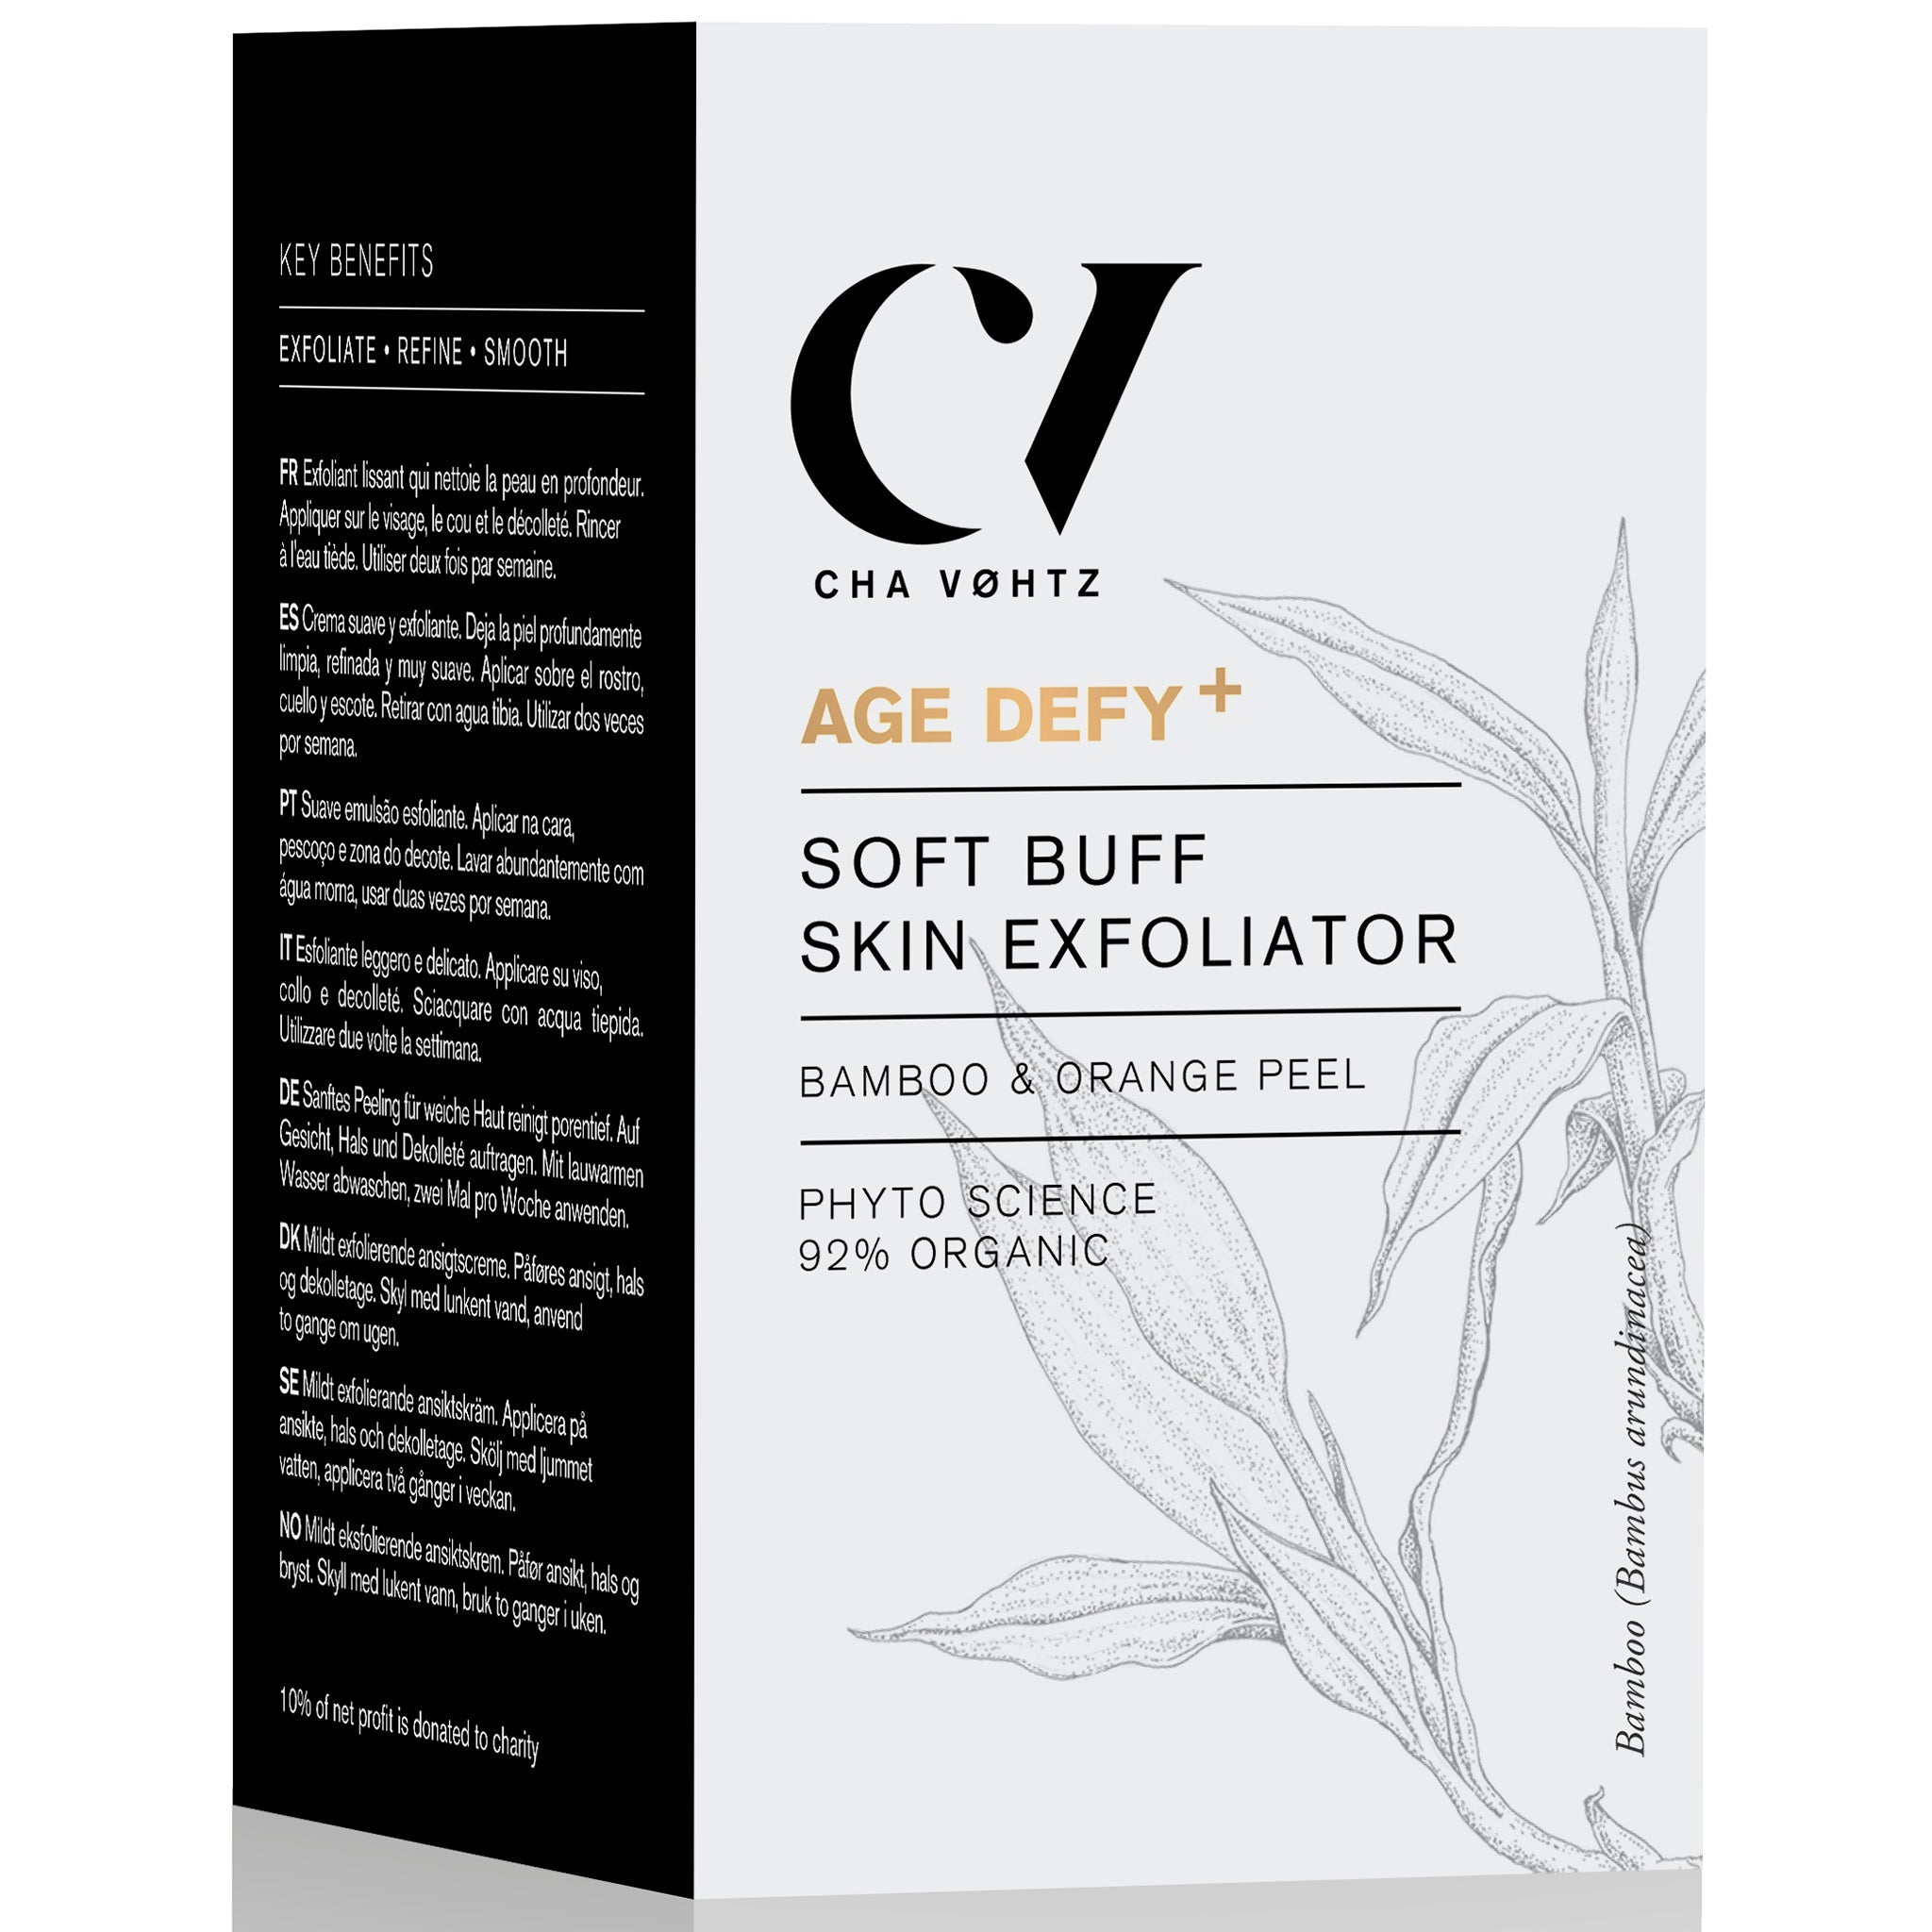 Age Defy+ Soft Buff Skin Exfoliator - mypure.co.uk